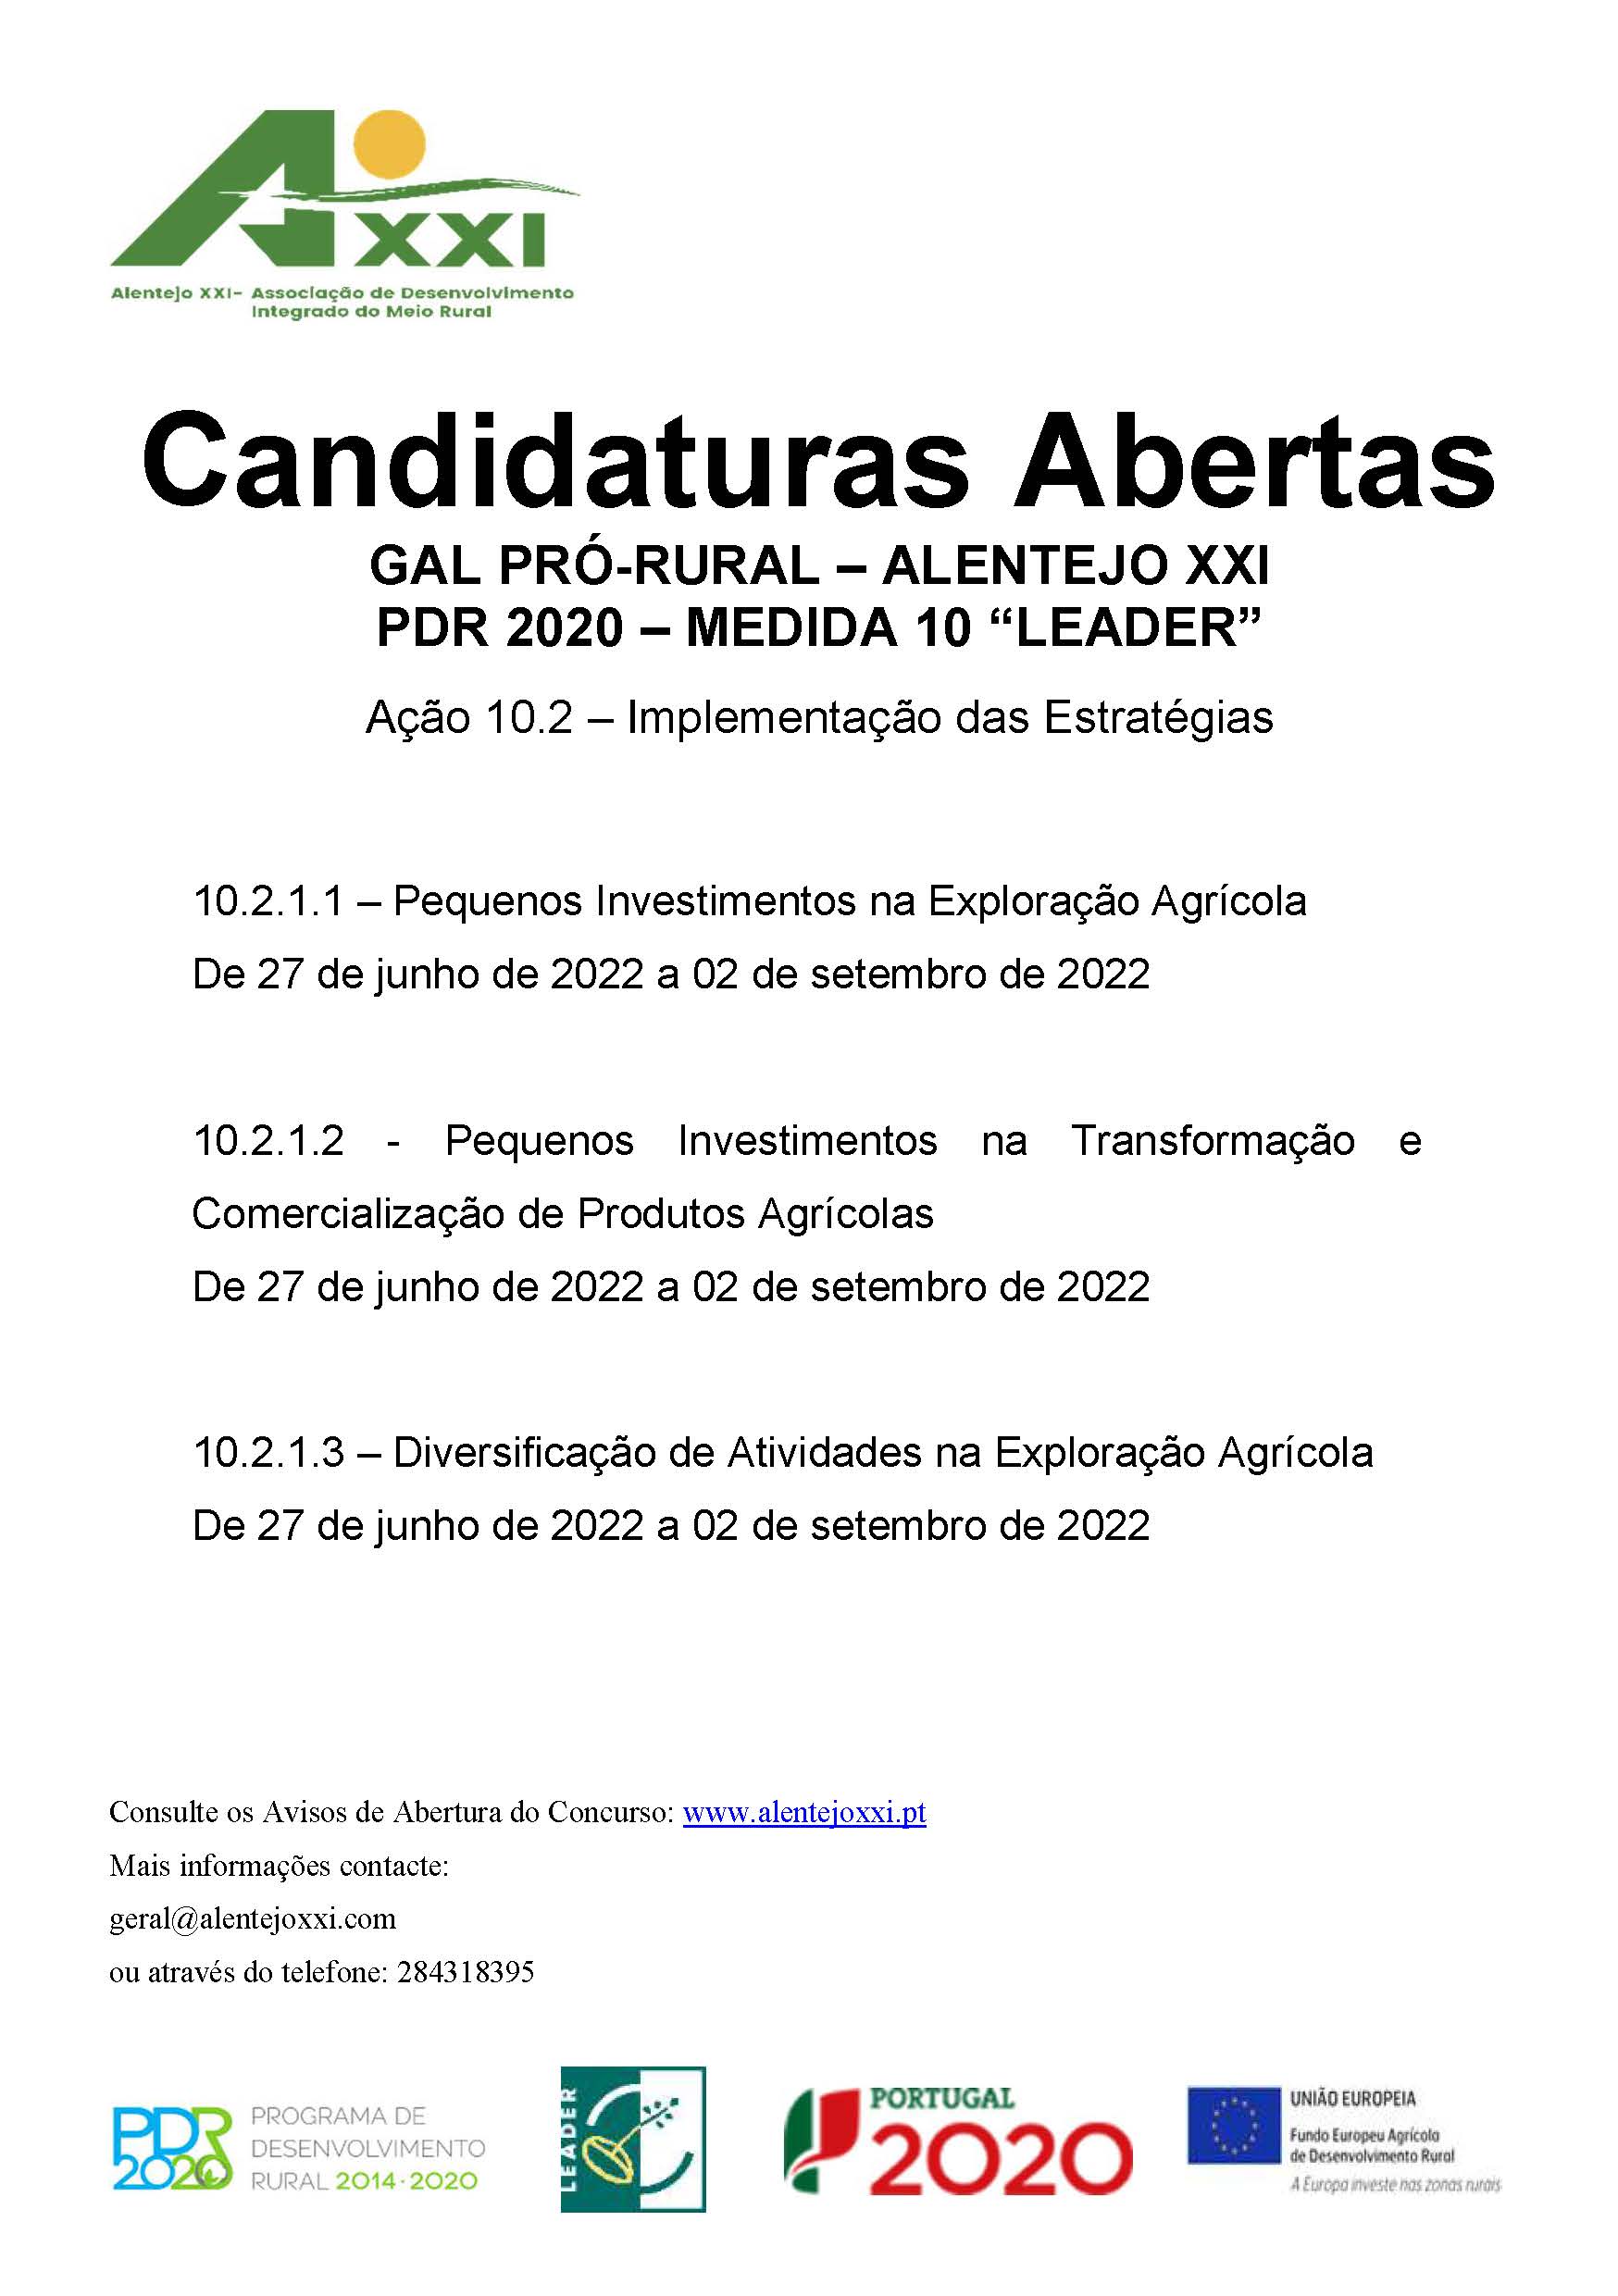 Candidaturas Abertas GAL PRÓ-RURAL – ALENTEJO XXI PDR 2020 – MEDIDA 10 “LEADER”